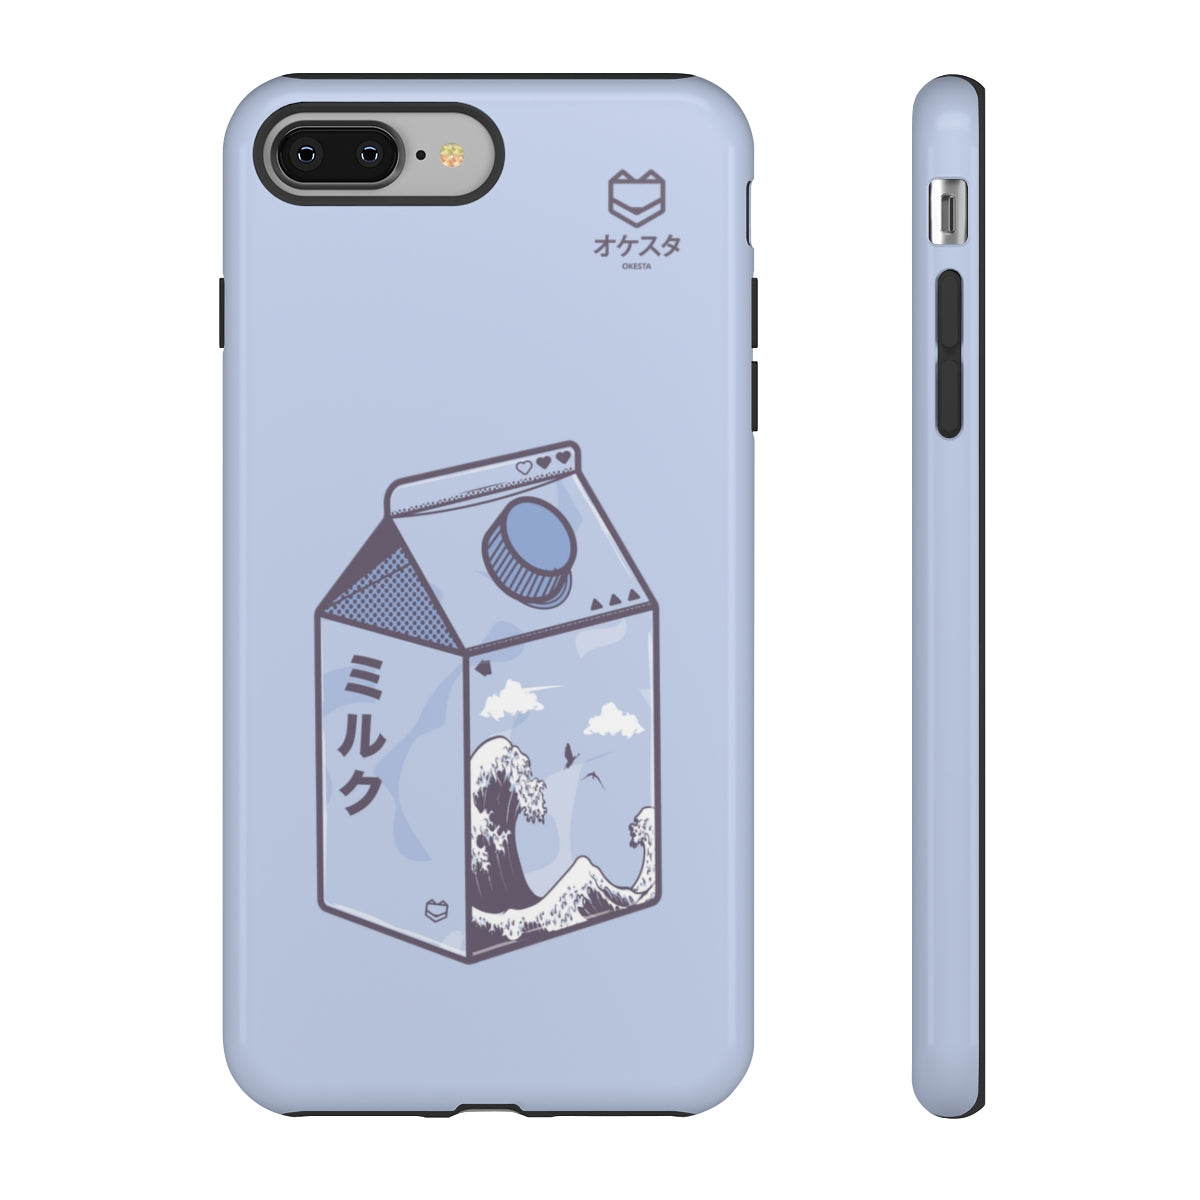 Kanagawa Carton iPhone Case